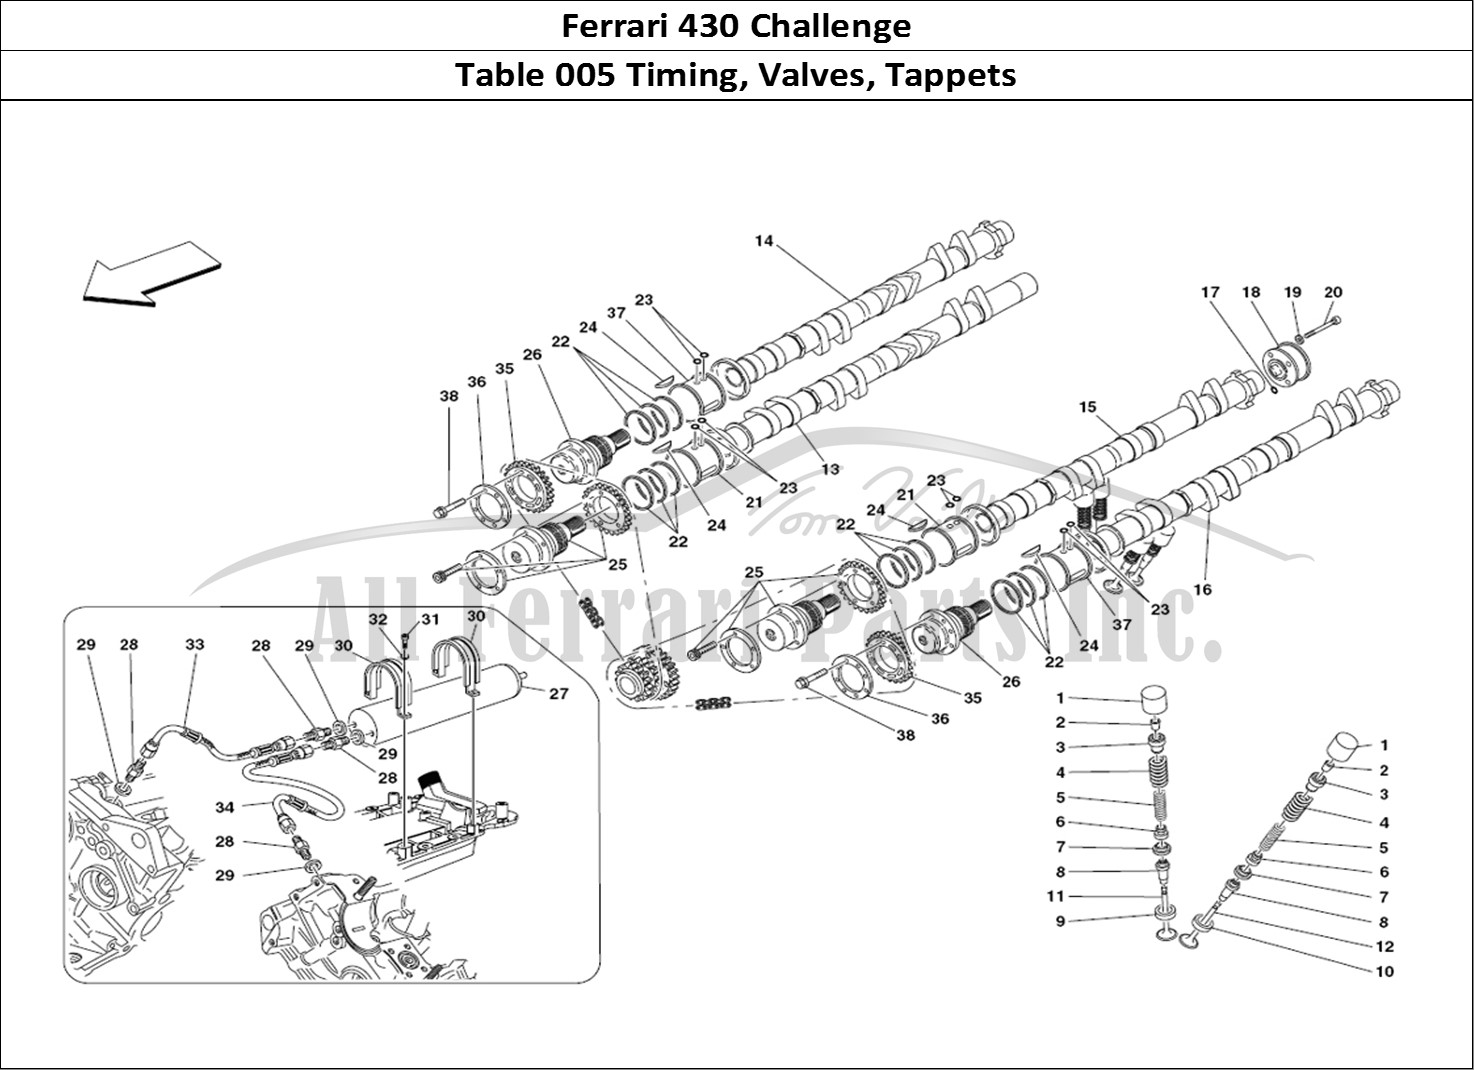 Ferrari Parts Ferrari 430 Challenge (2006) Page 005 Timing - Tappets